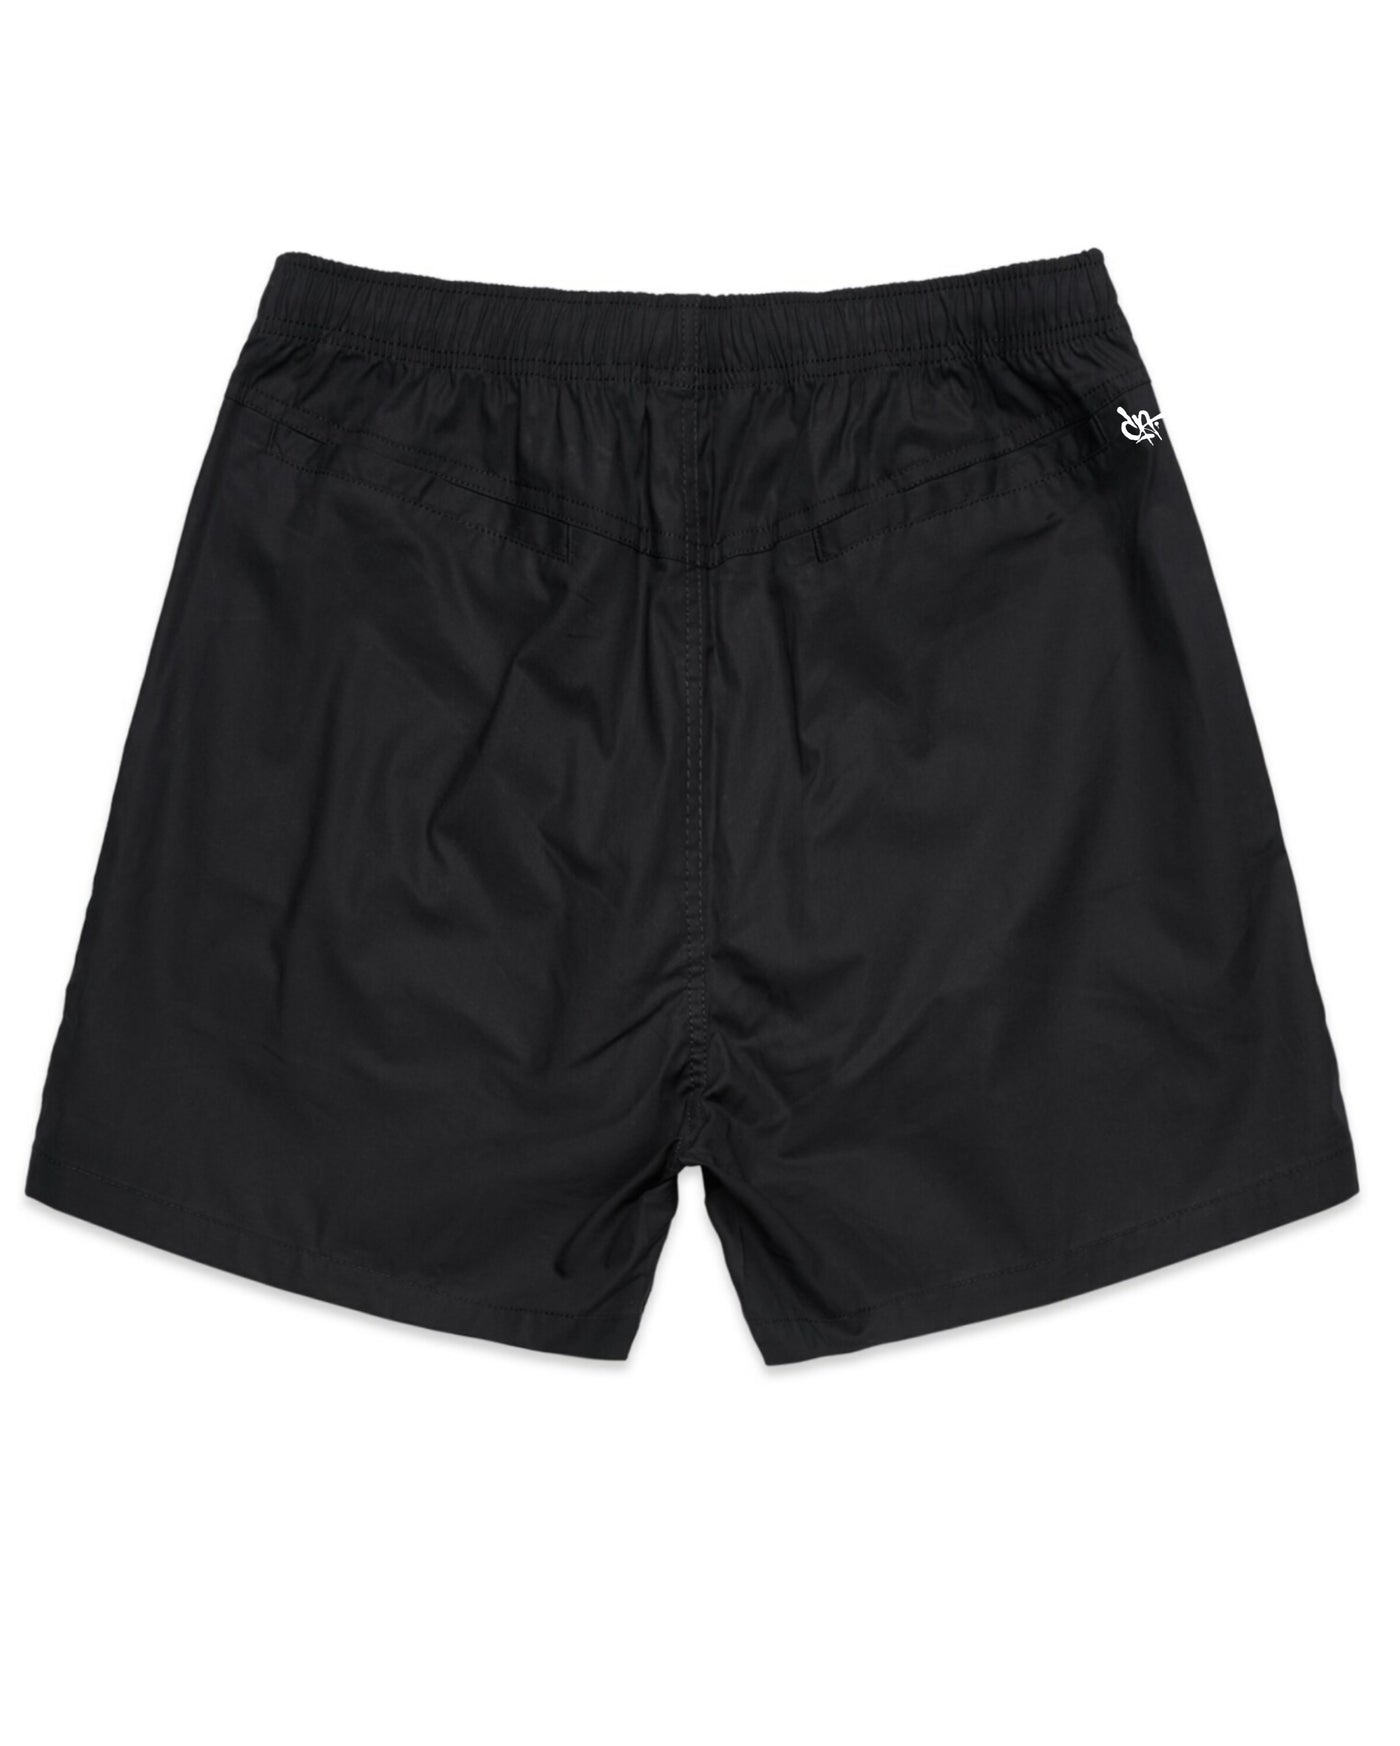 Nymph Beach Shorts